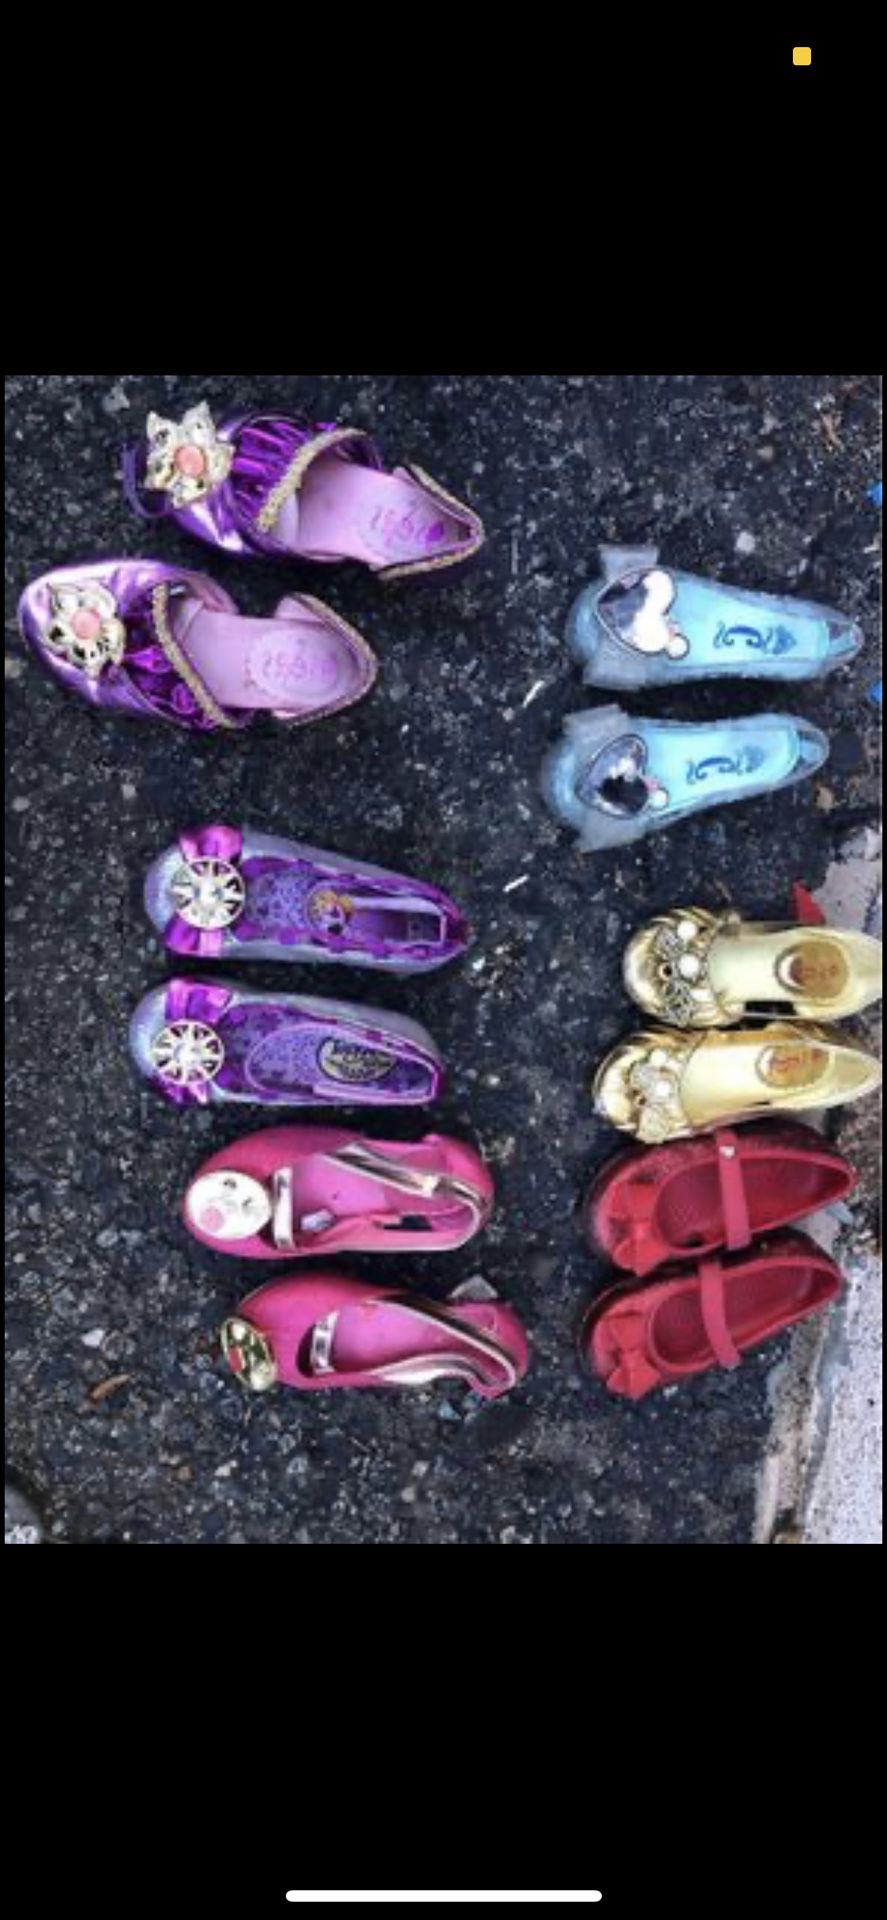 Disney Princess Shoes